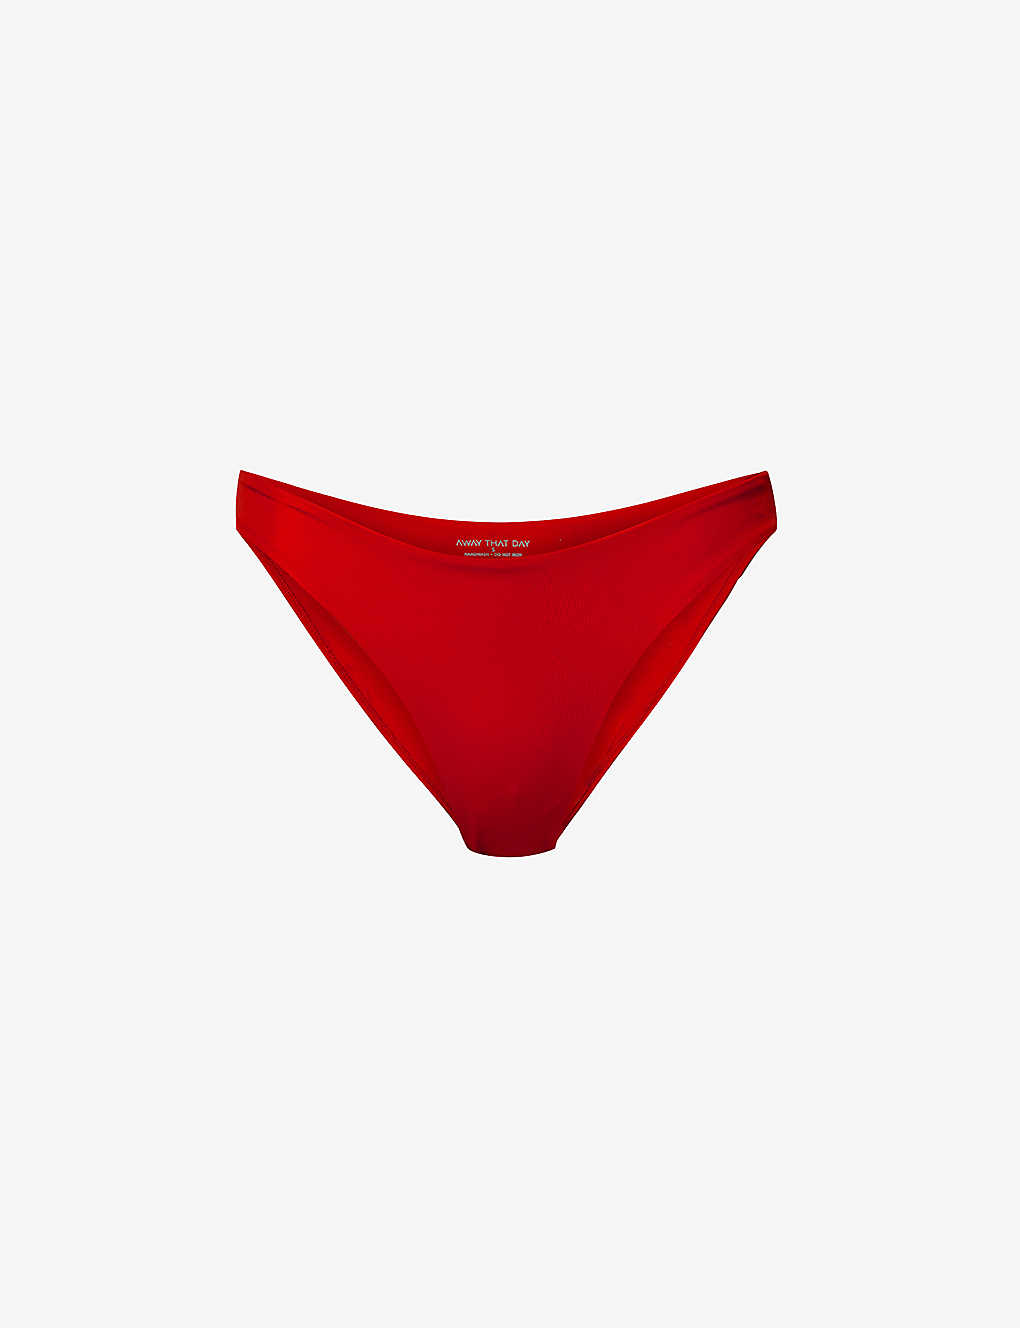 Away That Day Womens Red Portofino Recycled Polyamide-blend Bikini Bottoms